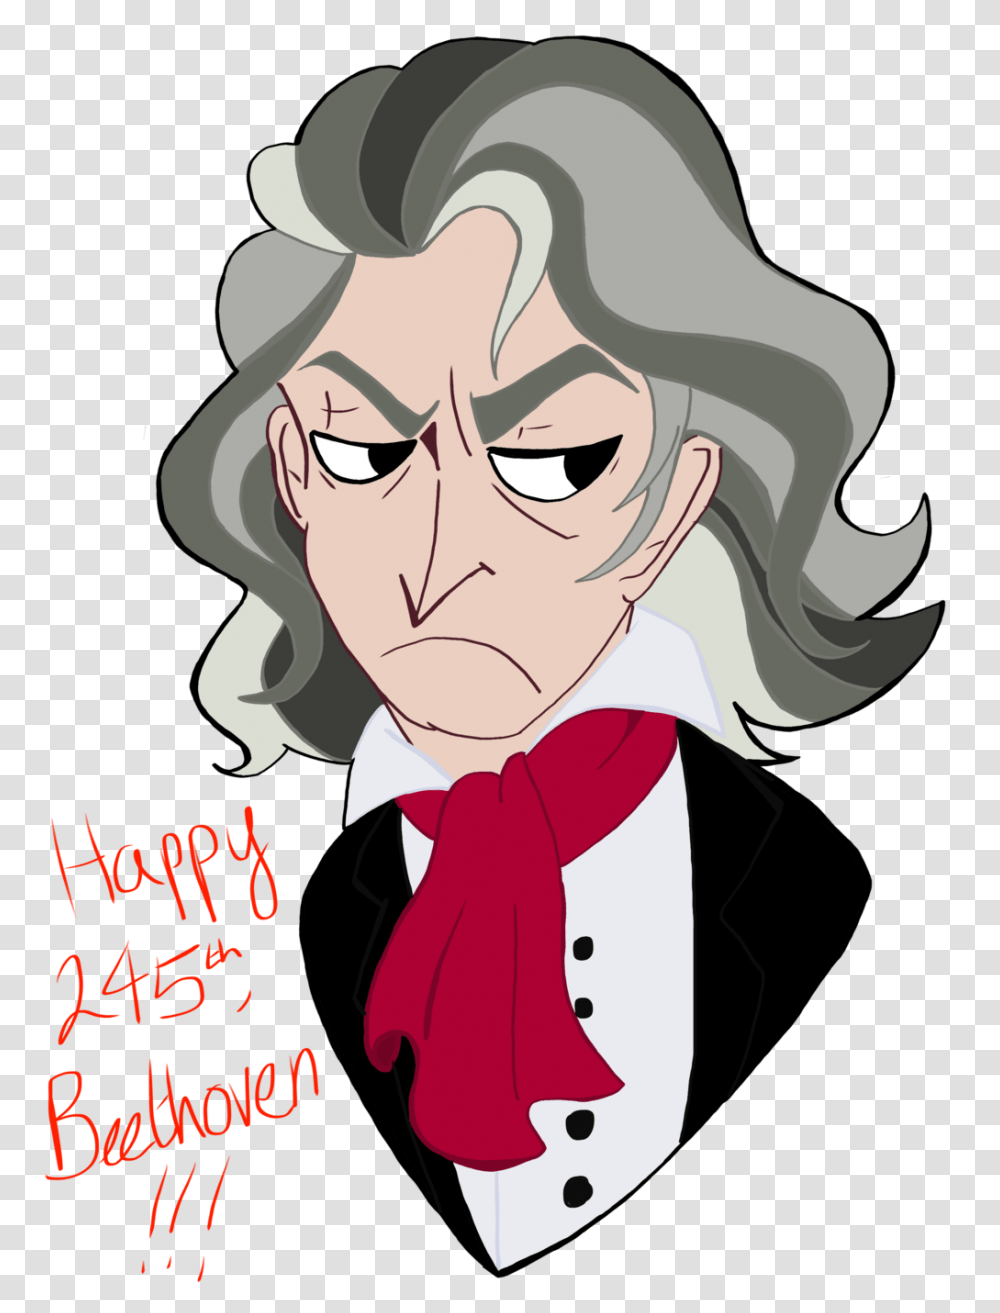 Beethovens Birthday Ddddd, Person, Human, Apparel Transparent Png